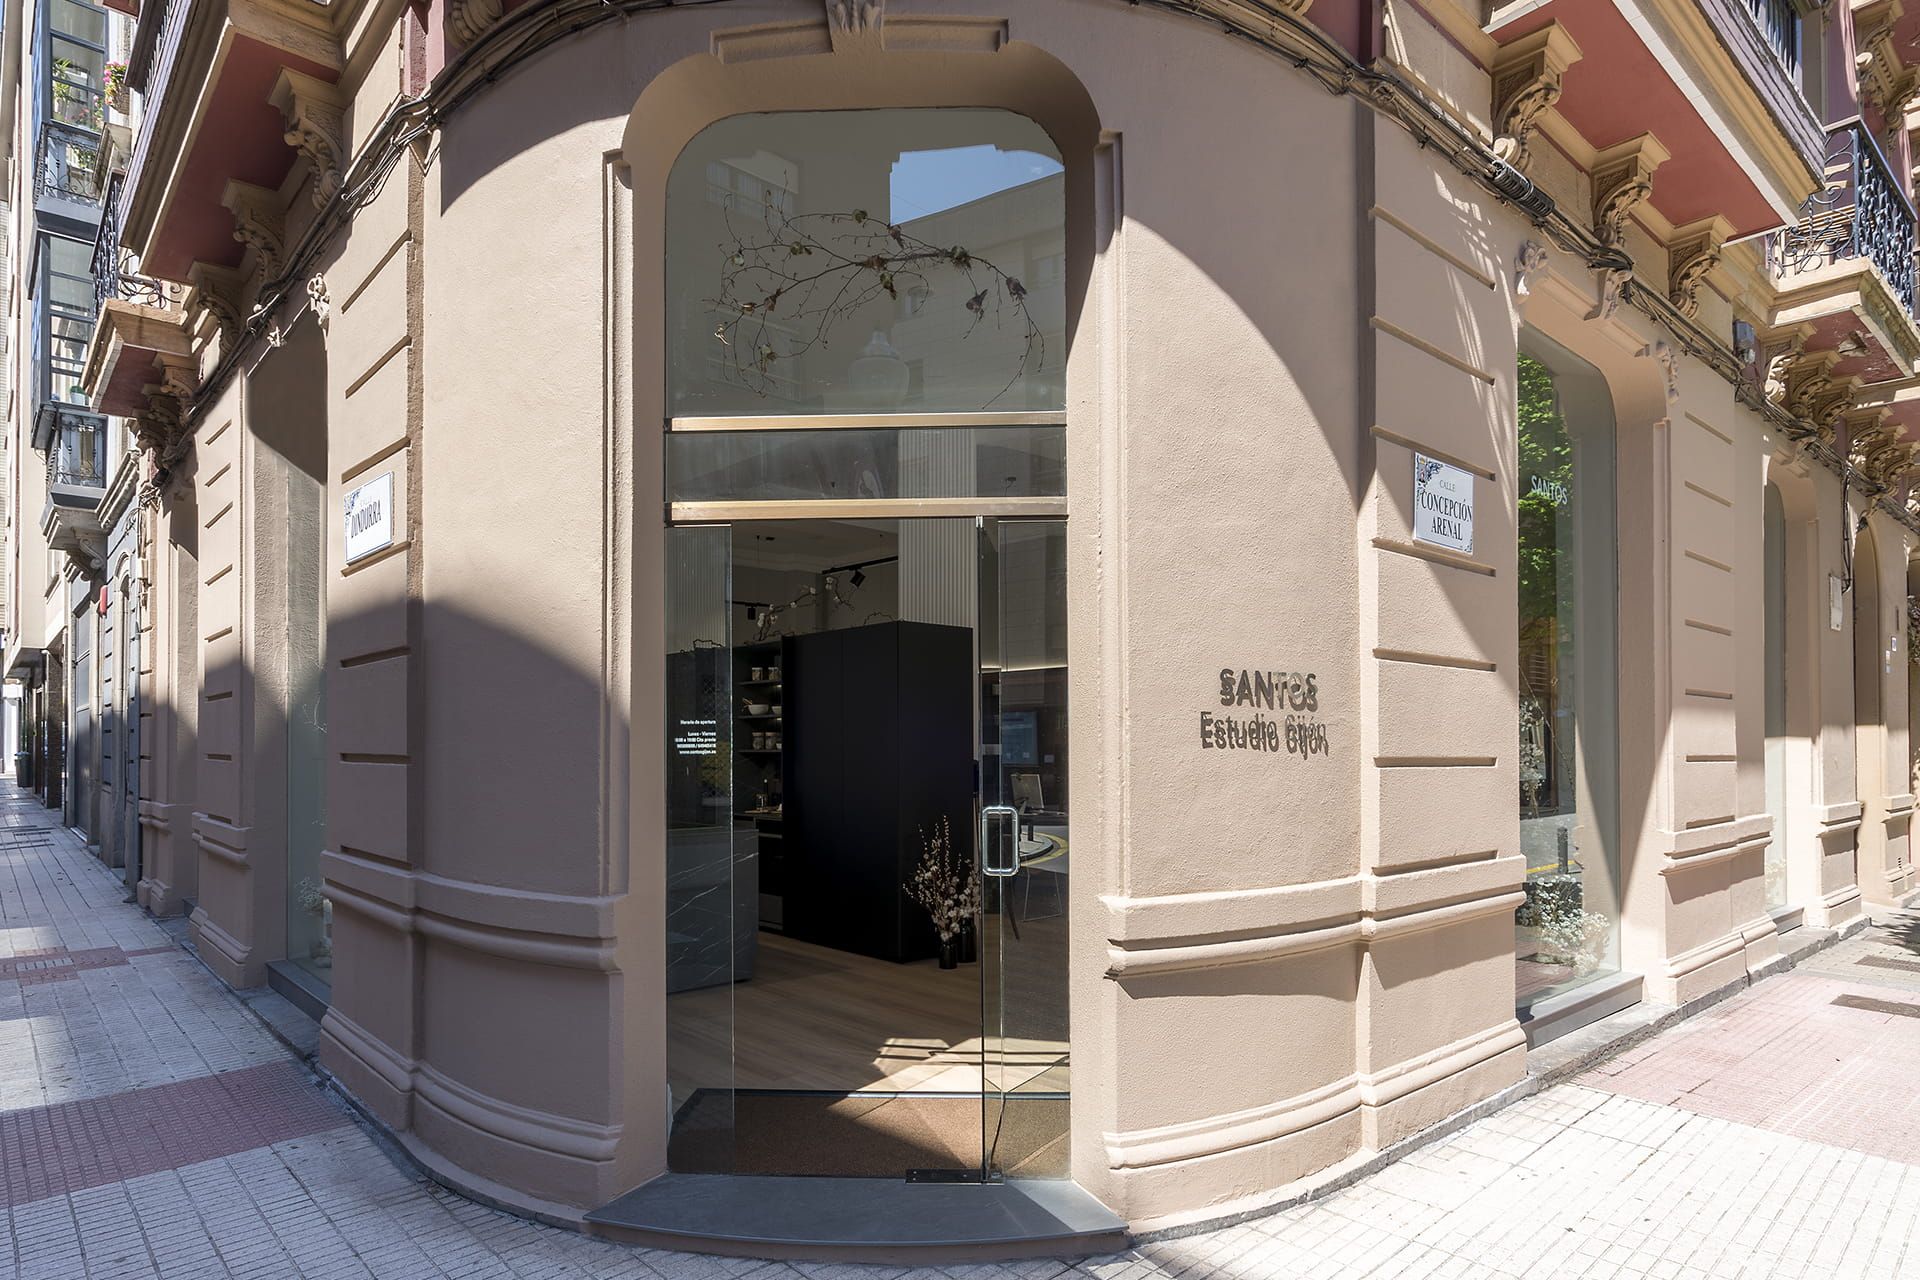 Entrance to the new Santos Estudio showroom in Gijón